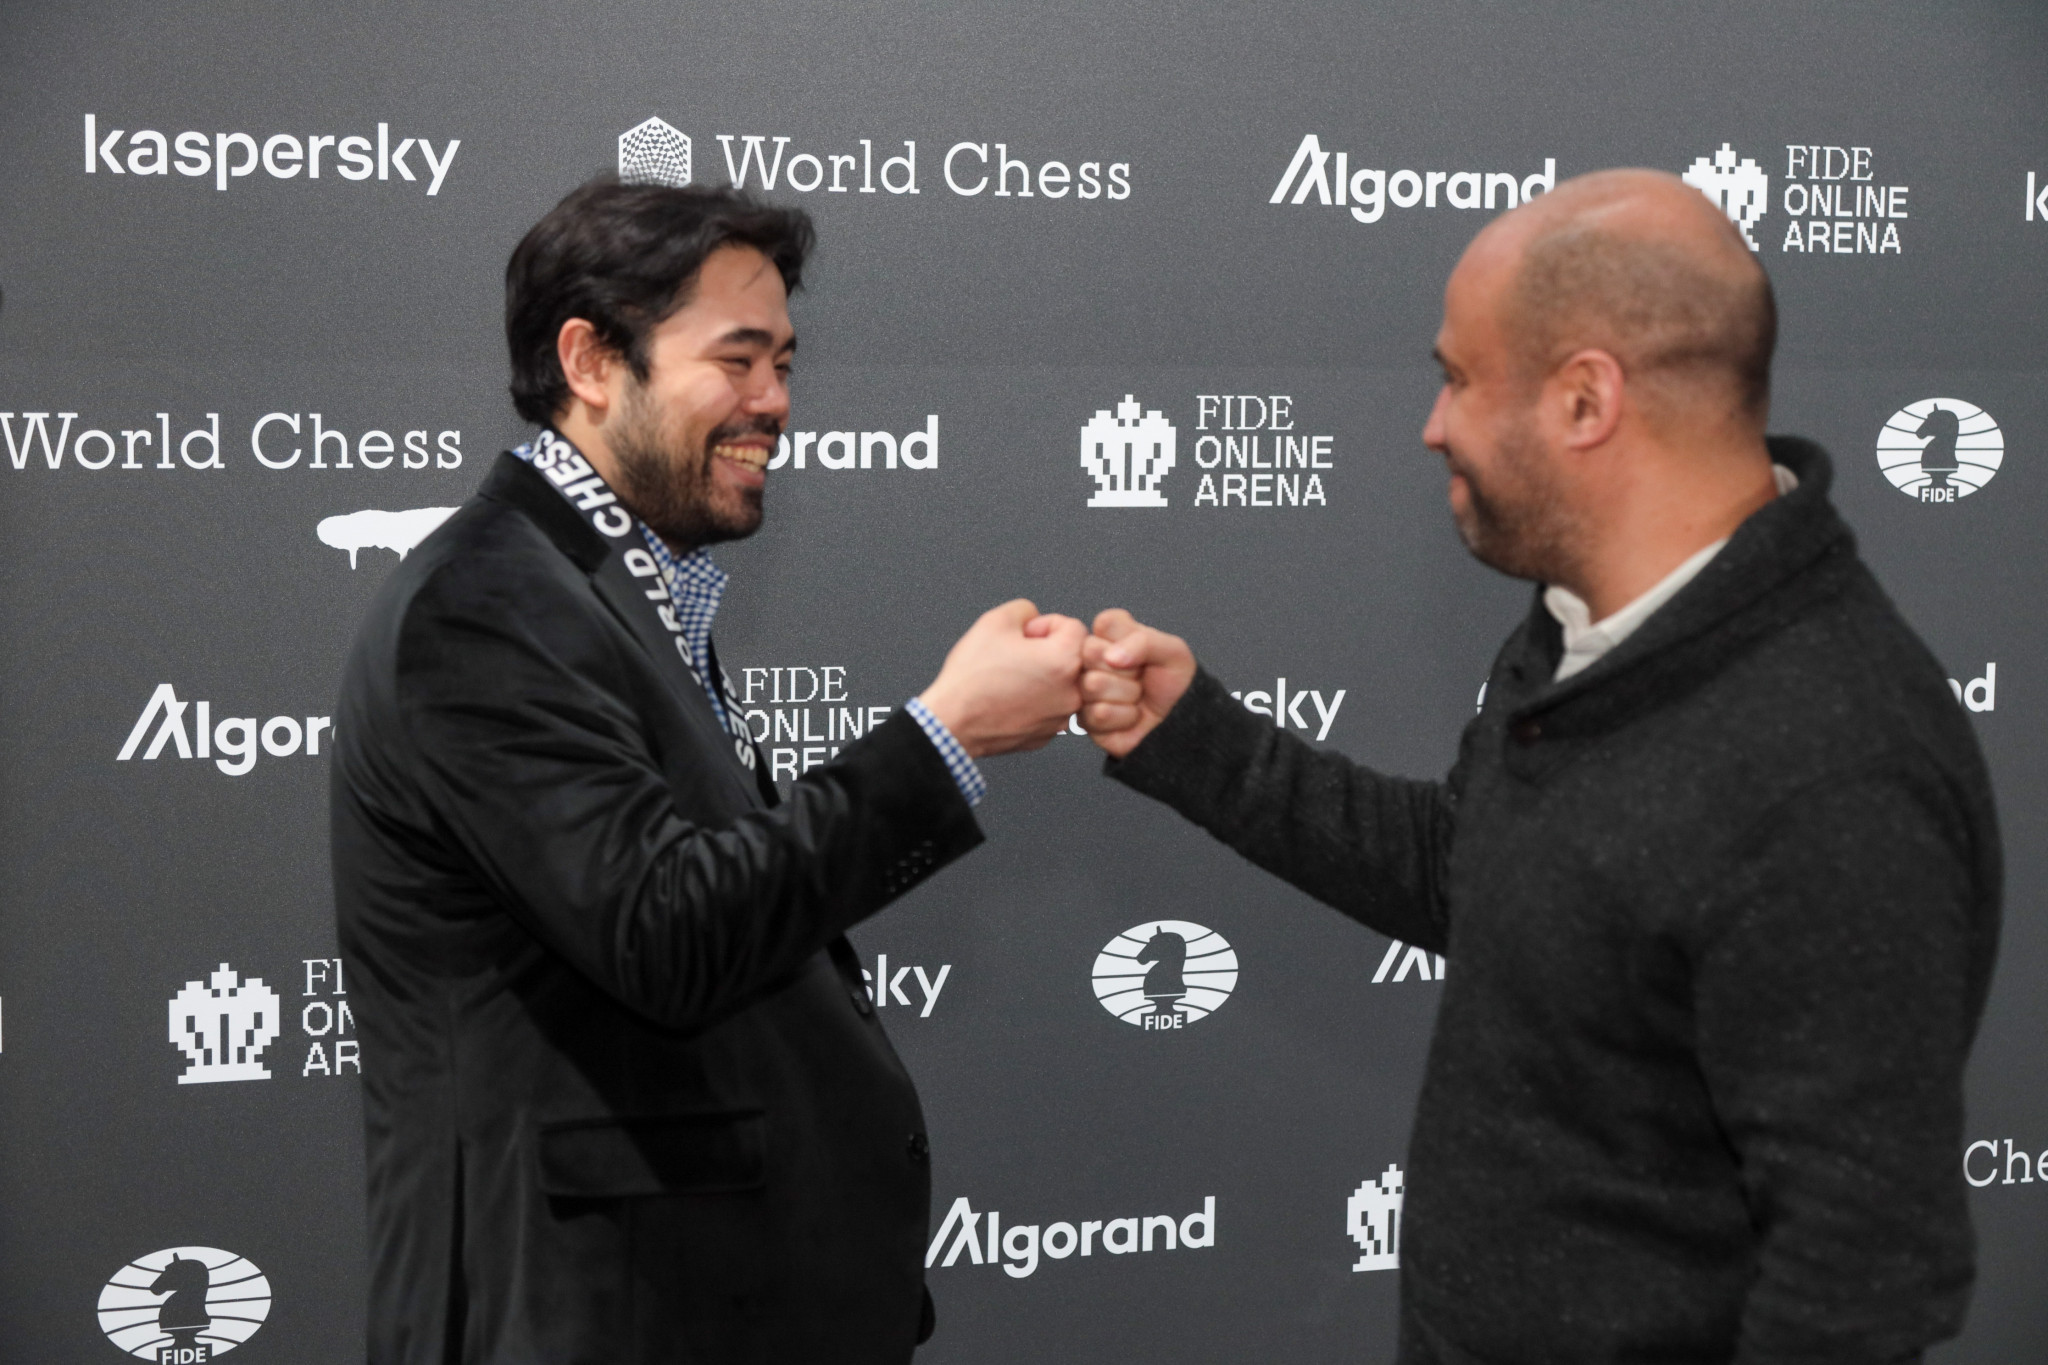 Hikaru Nakamura wins in Berlin as popular chess streamer leads Grand Prix, Chess